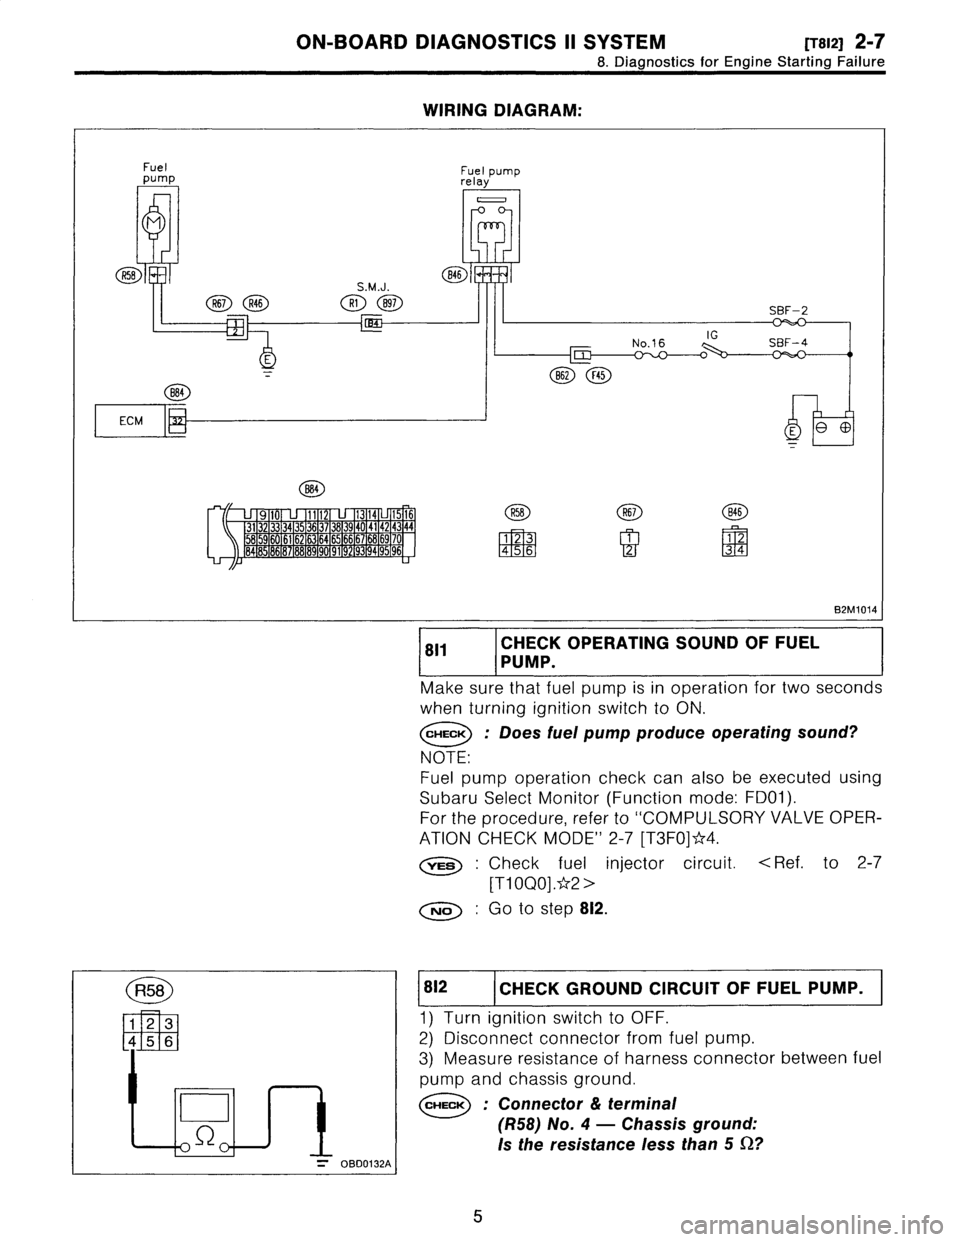 SUBARU LEGACY 1996  Service Repair Manual 
ON-BOARD
DIAGNOSTICS
II
SYSTEM
[rsi2]
2-7
8
.
Diagnostics
for
Engine
Starting
Failure

WIRING
DIAGRAM
:

Fuel
pump

M

R58
S
.M
.J
.

R67R46
R1
897

E

B84

ECM

Fuel
pump
relay

0

846

SBF-2

No
.1